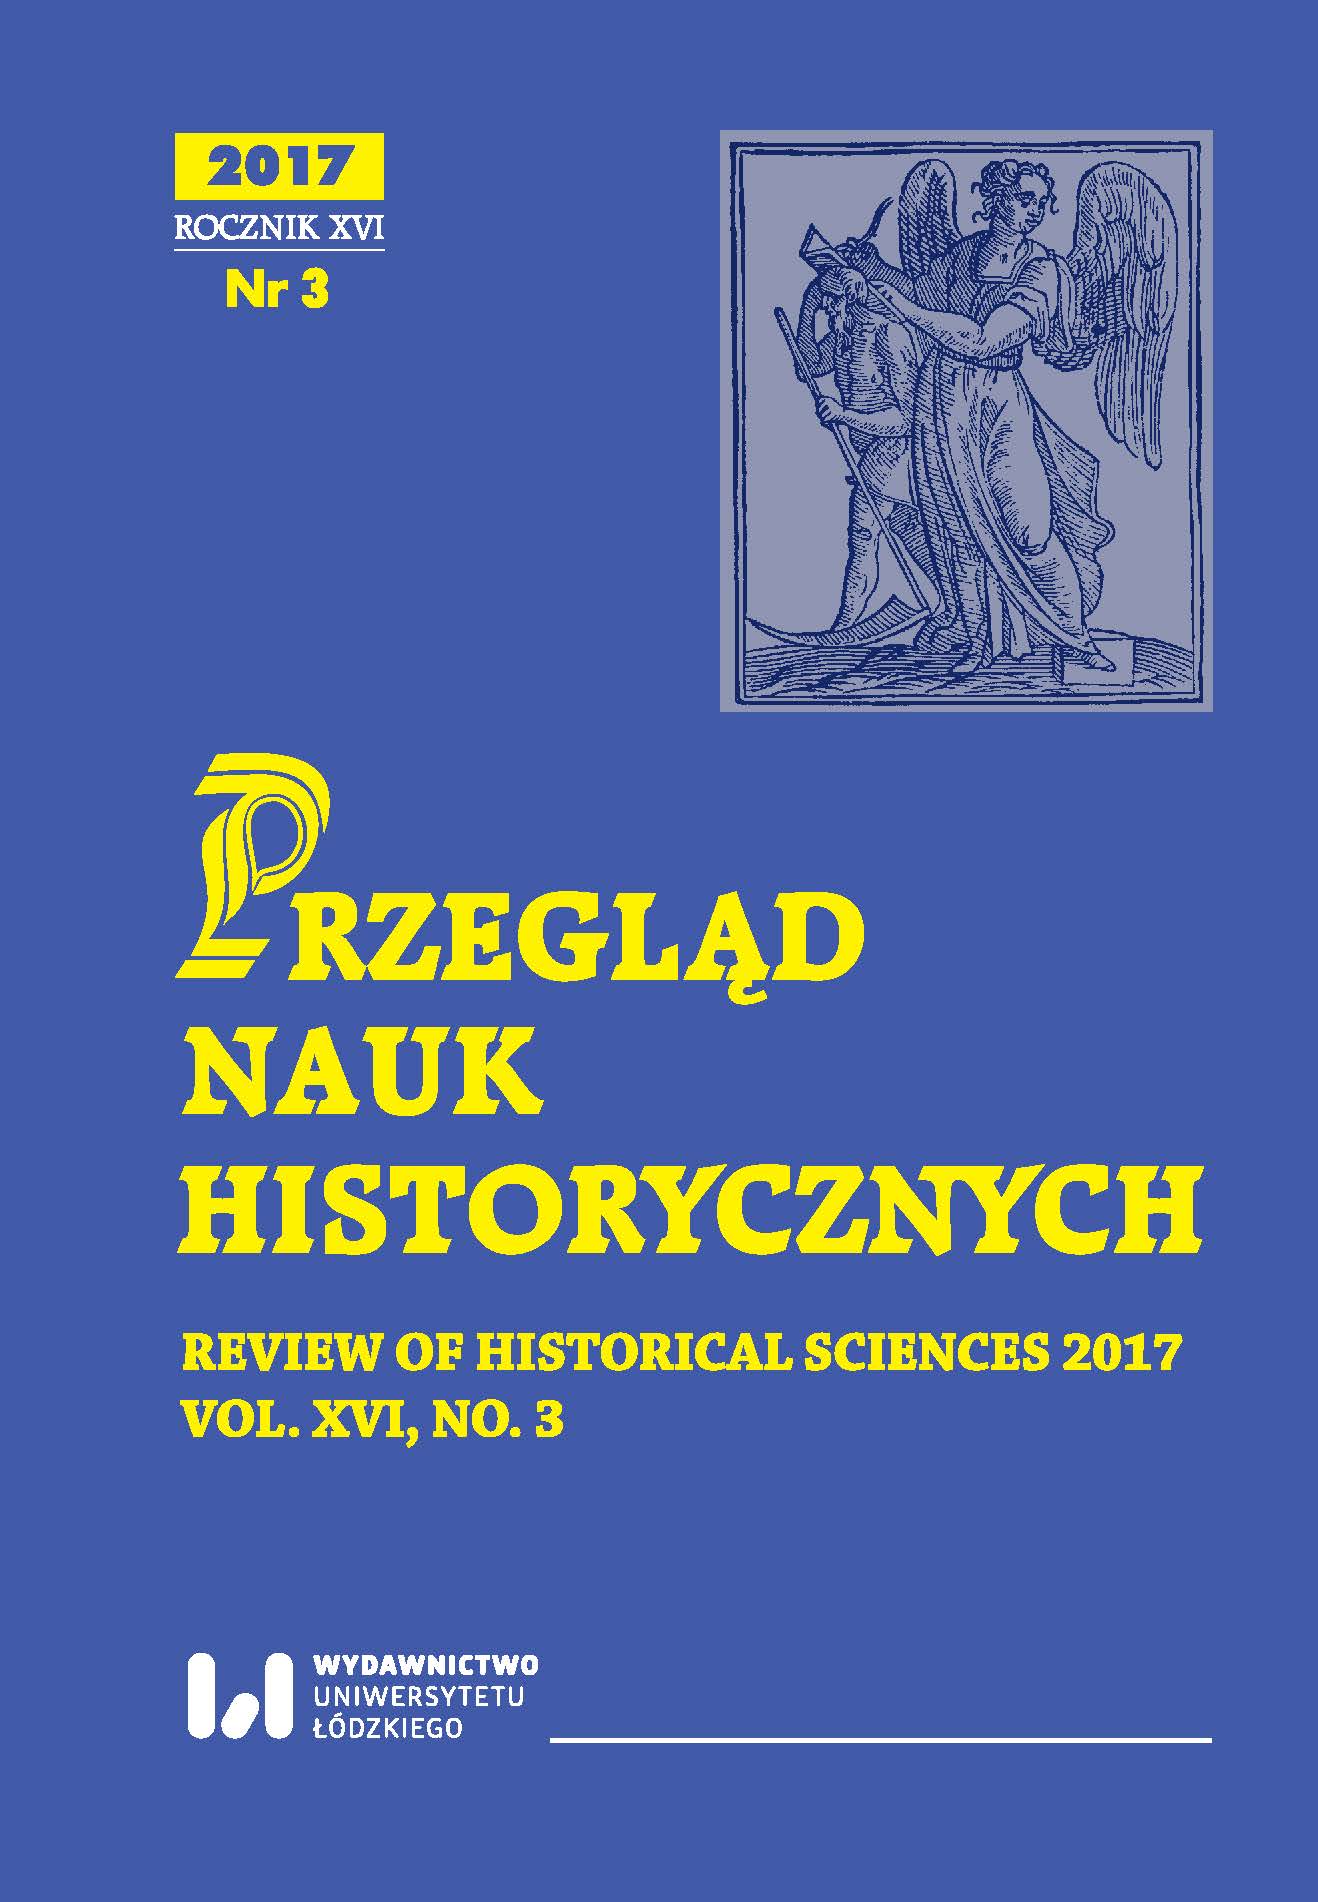 On the biography of Leonard Marcin Świeykowski Cover Image